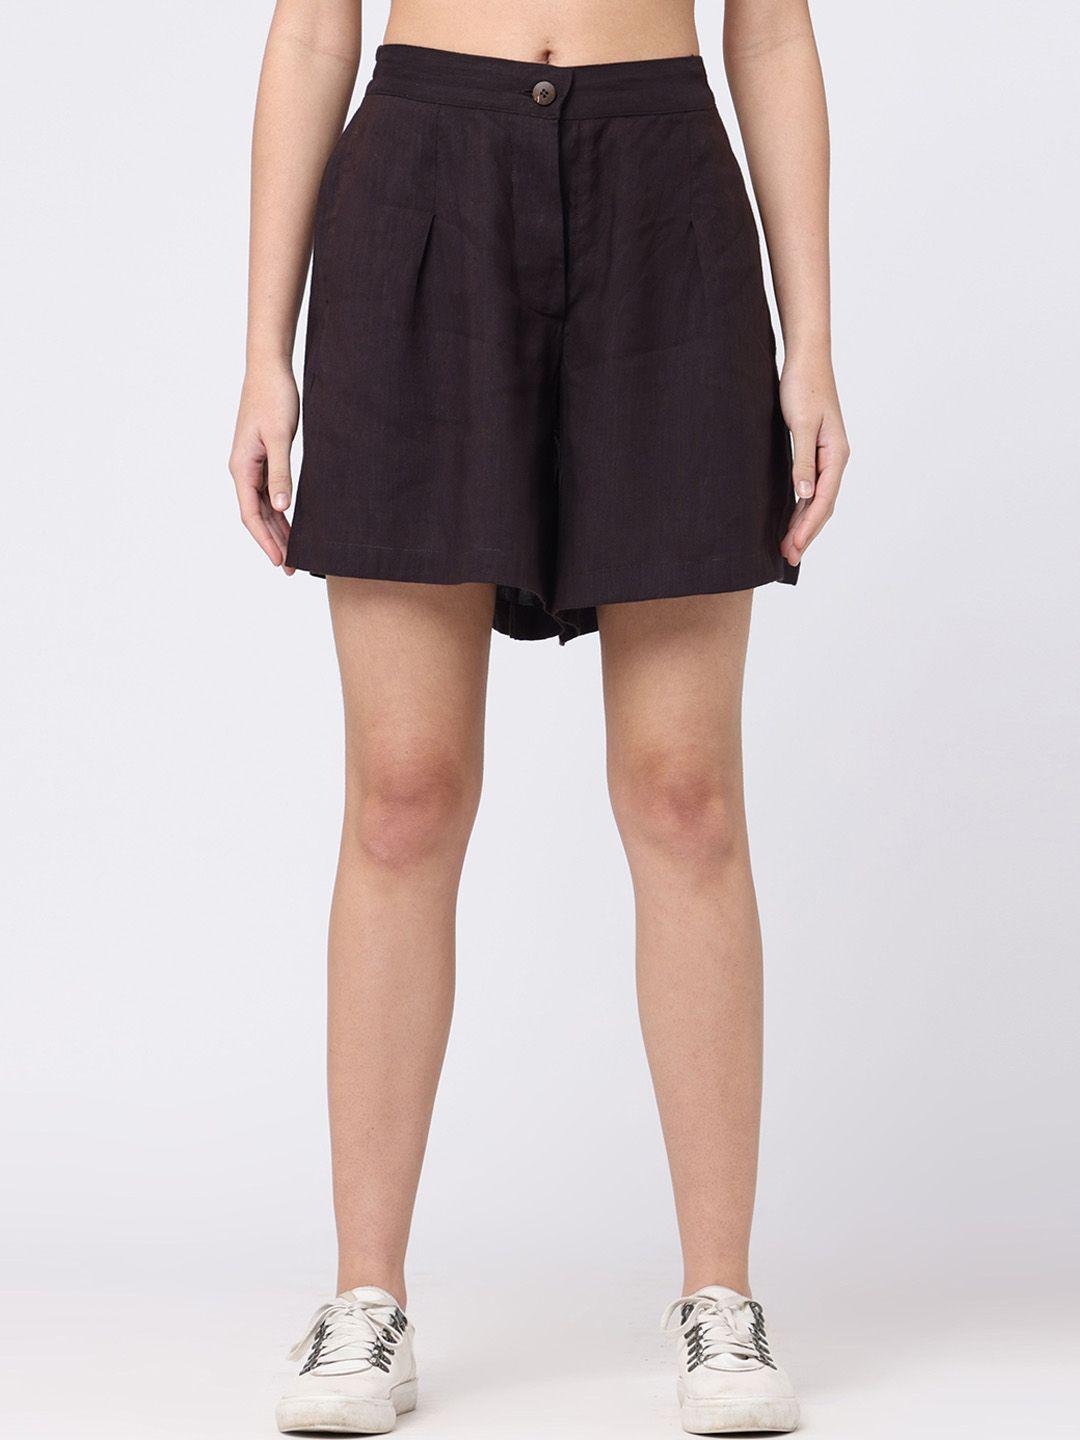 saltpetre sleeveless organic cotton top & shorts co-ords